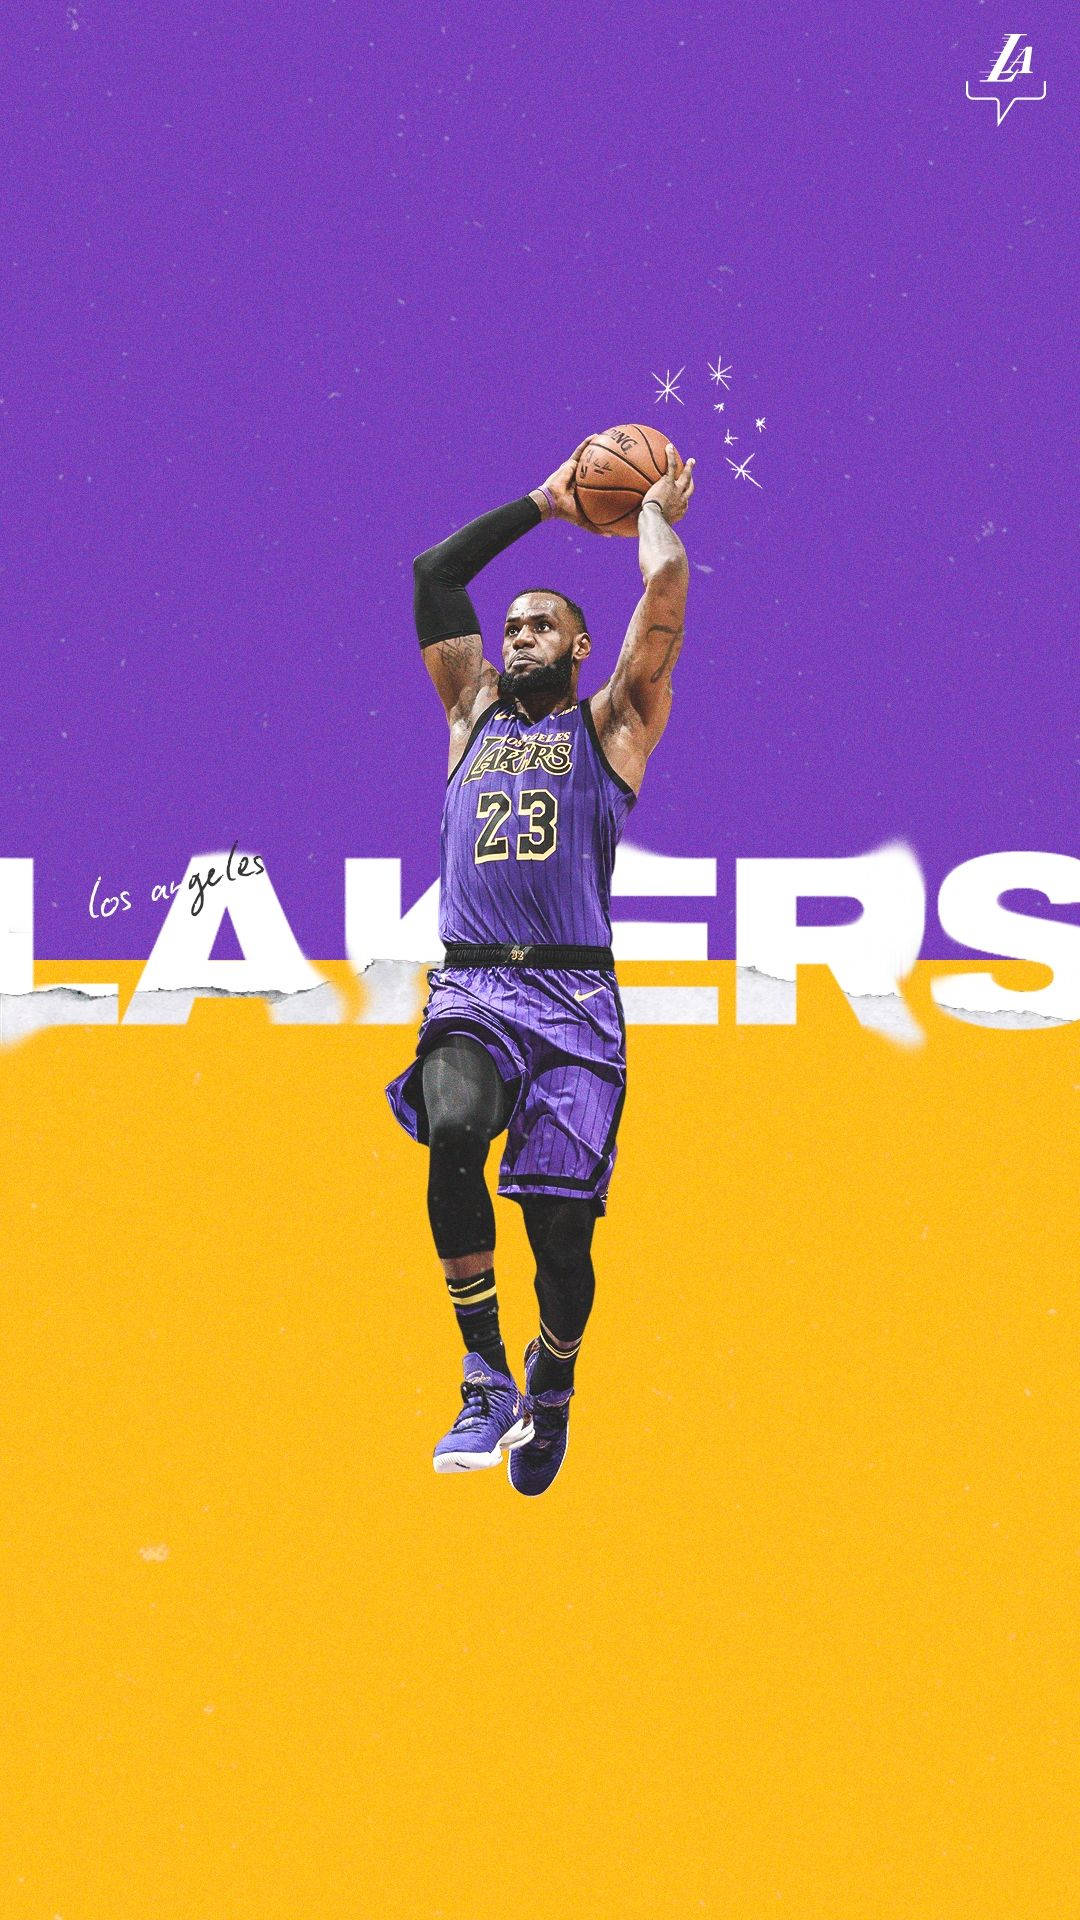 Lakershintergrundbilder Hd Hintergrundbilder. Wallpaper